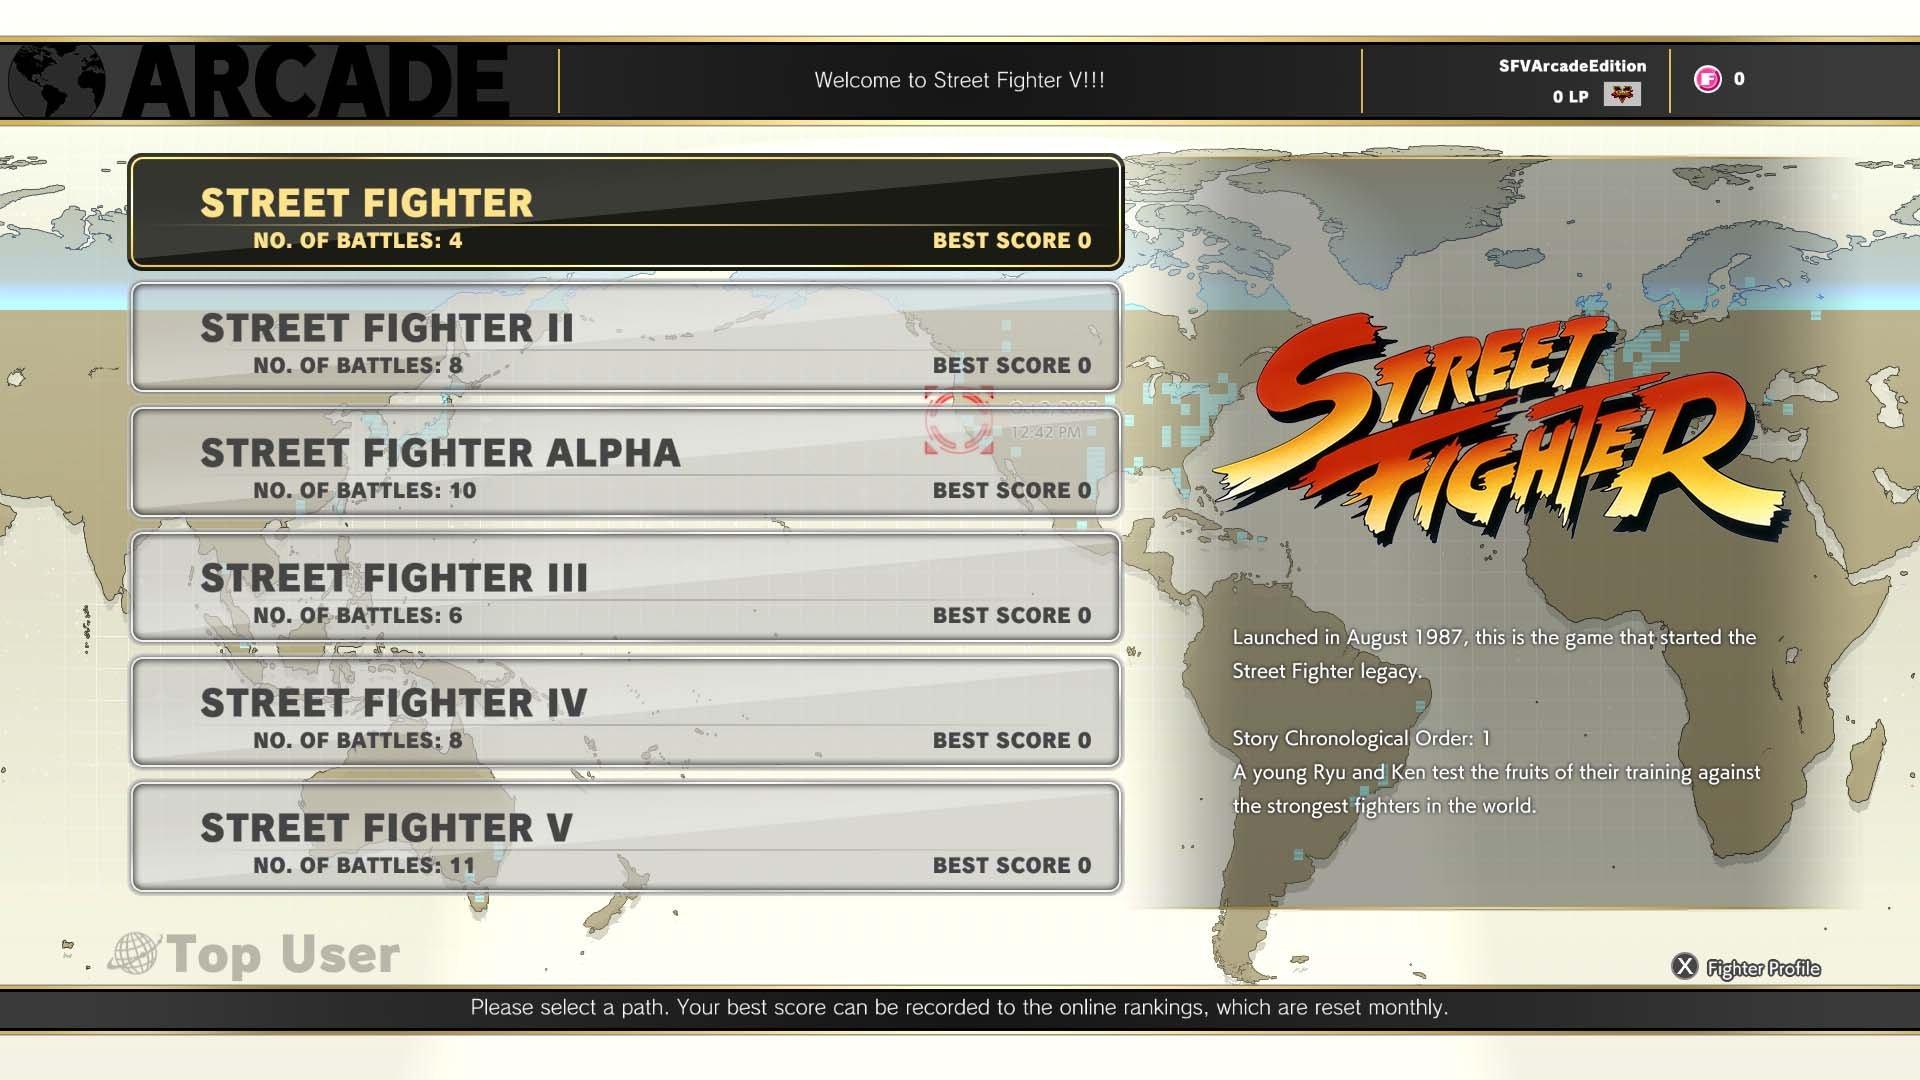 Uncharted 4, Street Fighter 5: confira melhores jogos de PS4 para 2016